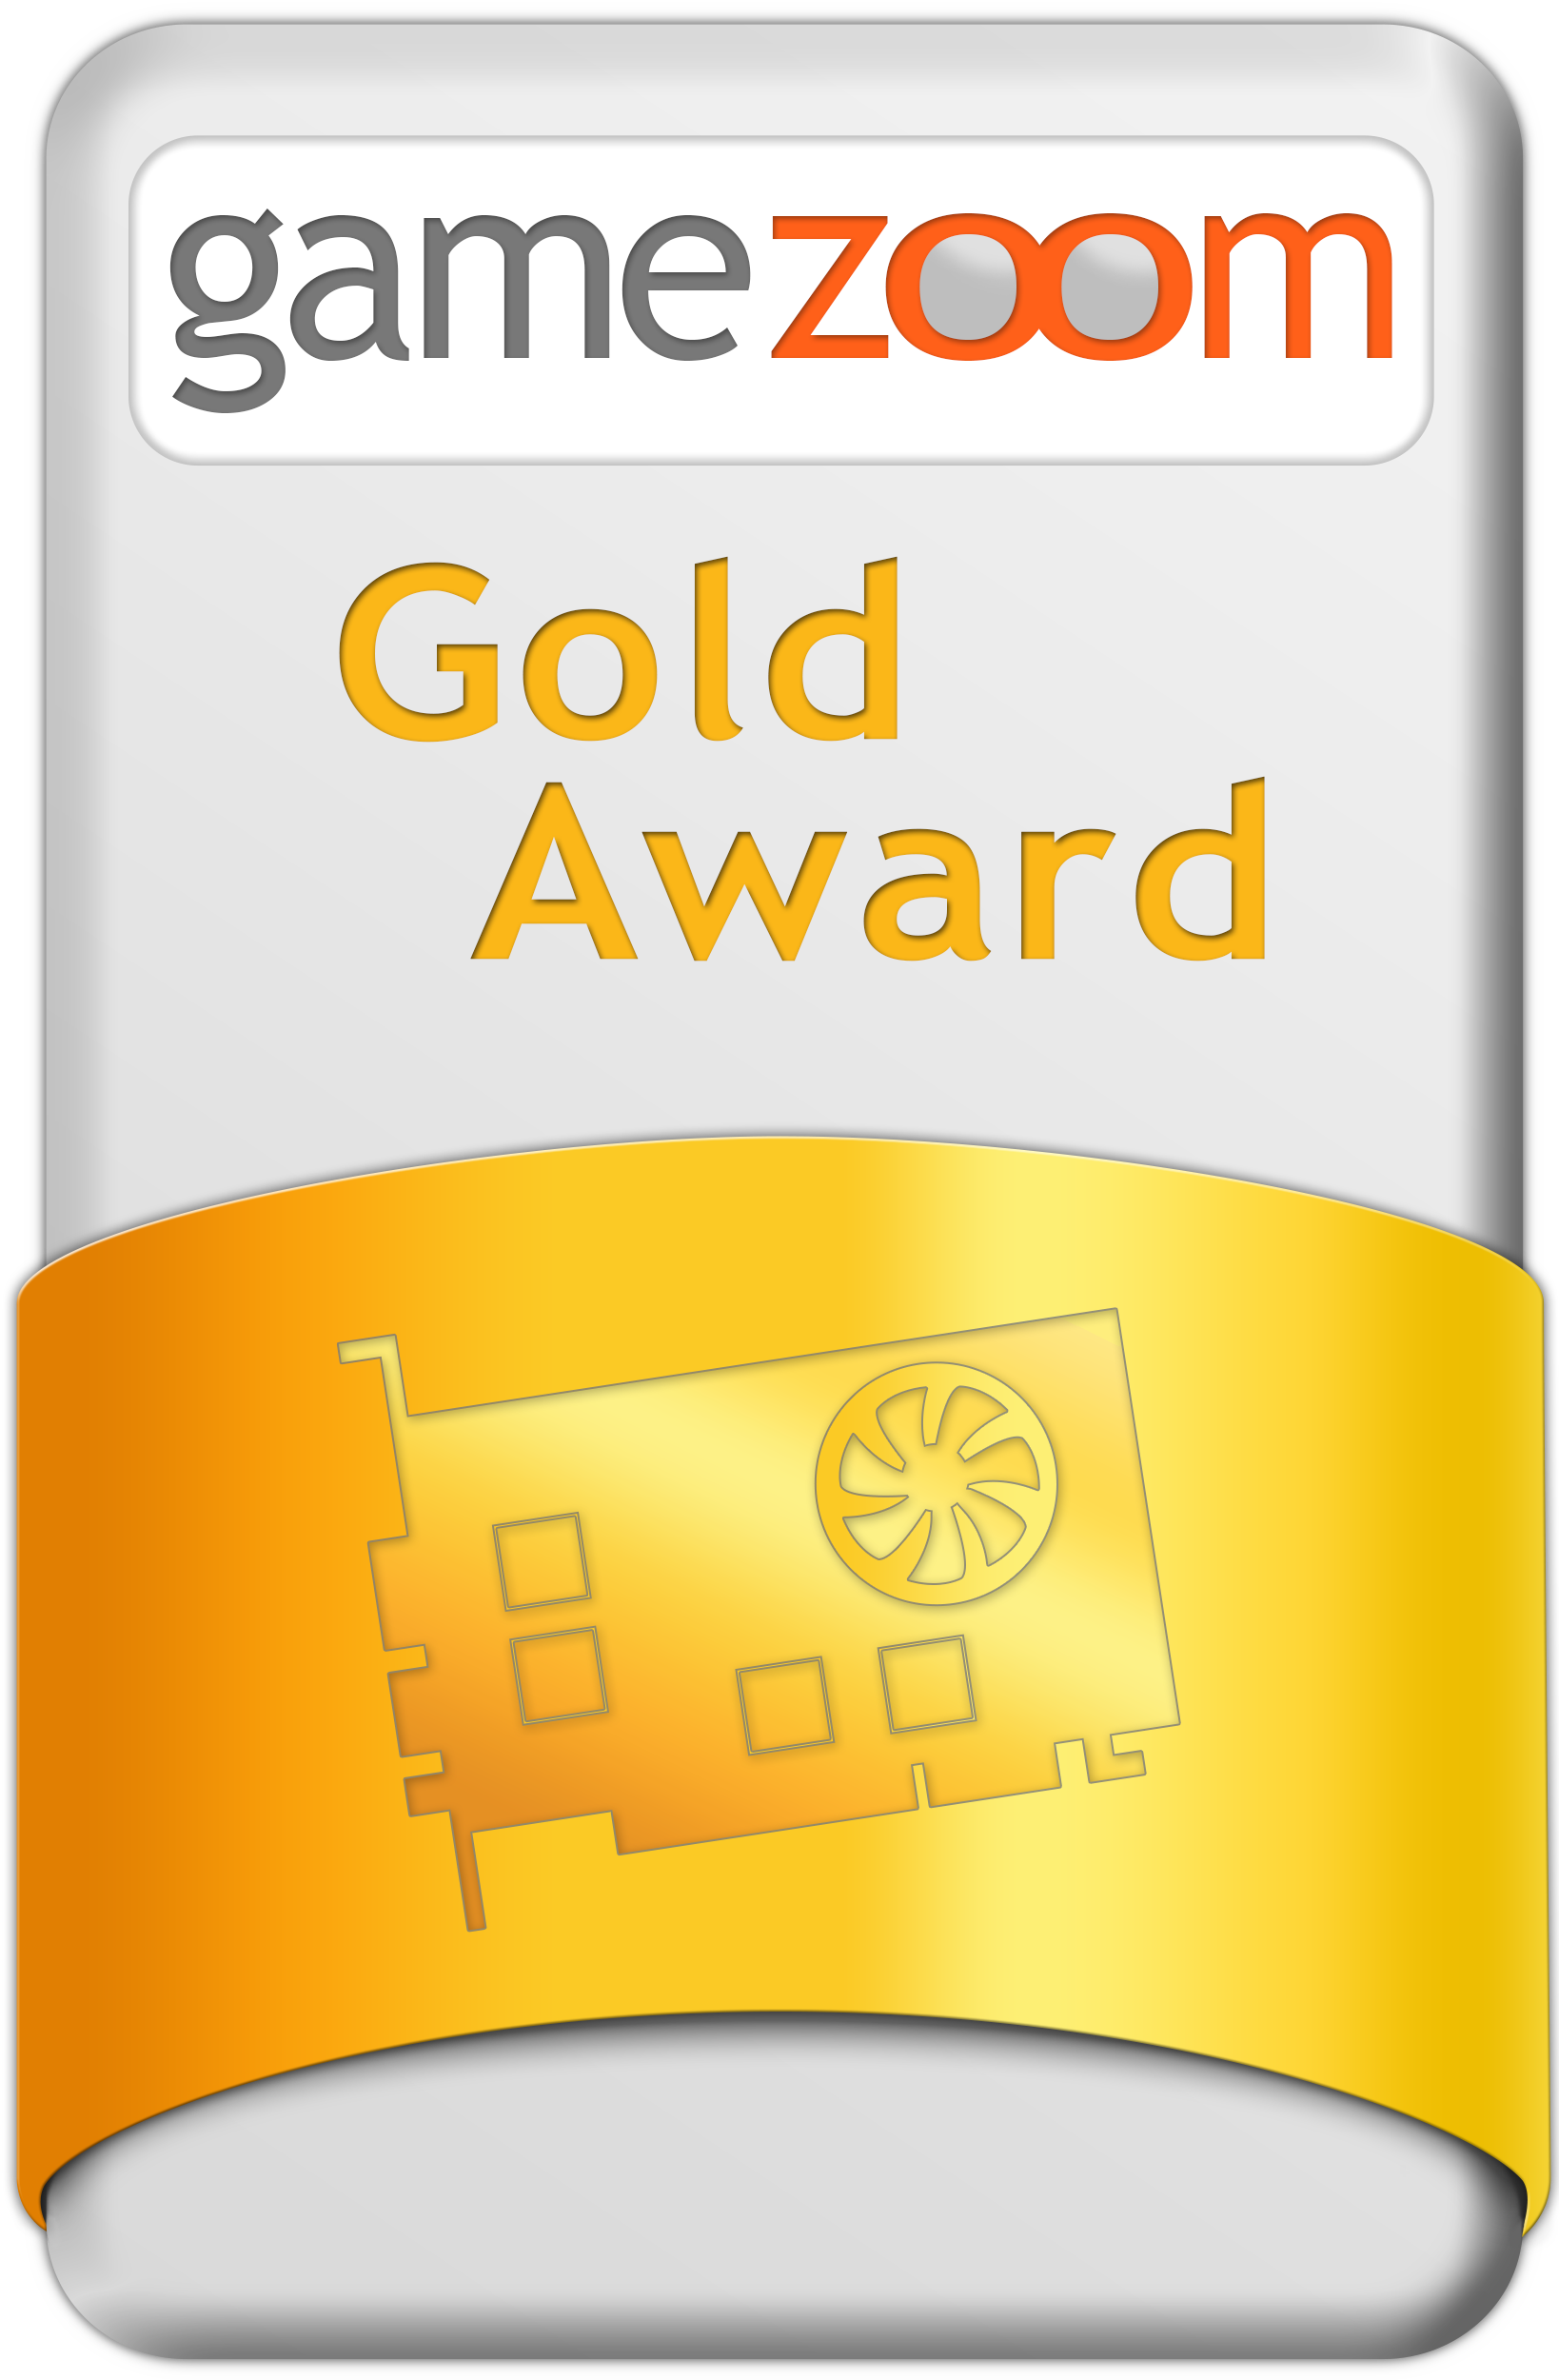 gamezoom.net: Gold Award